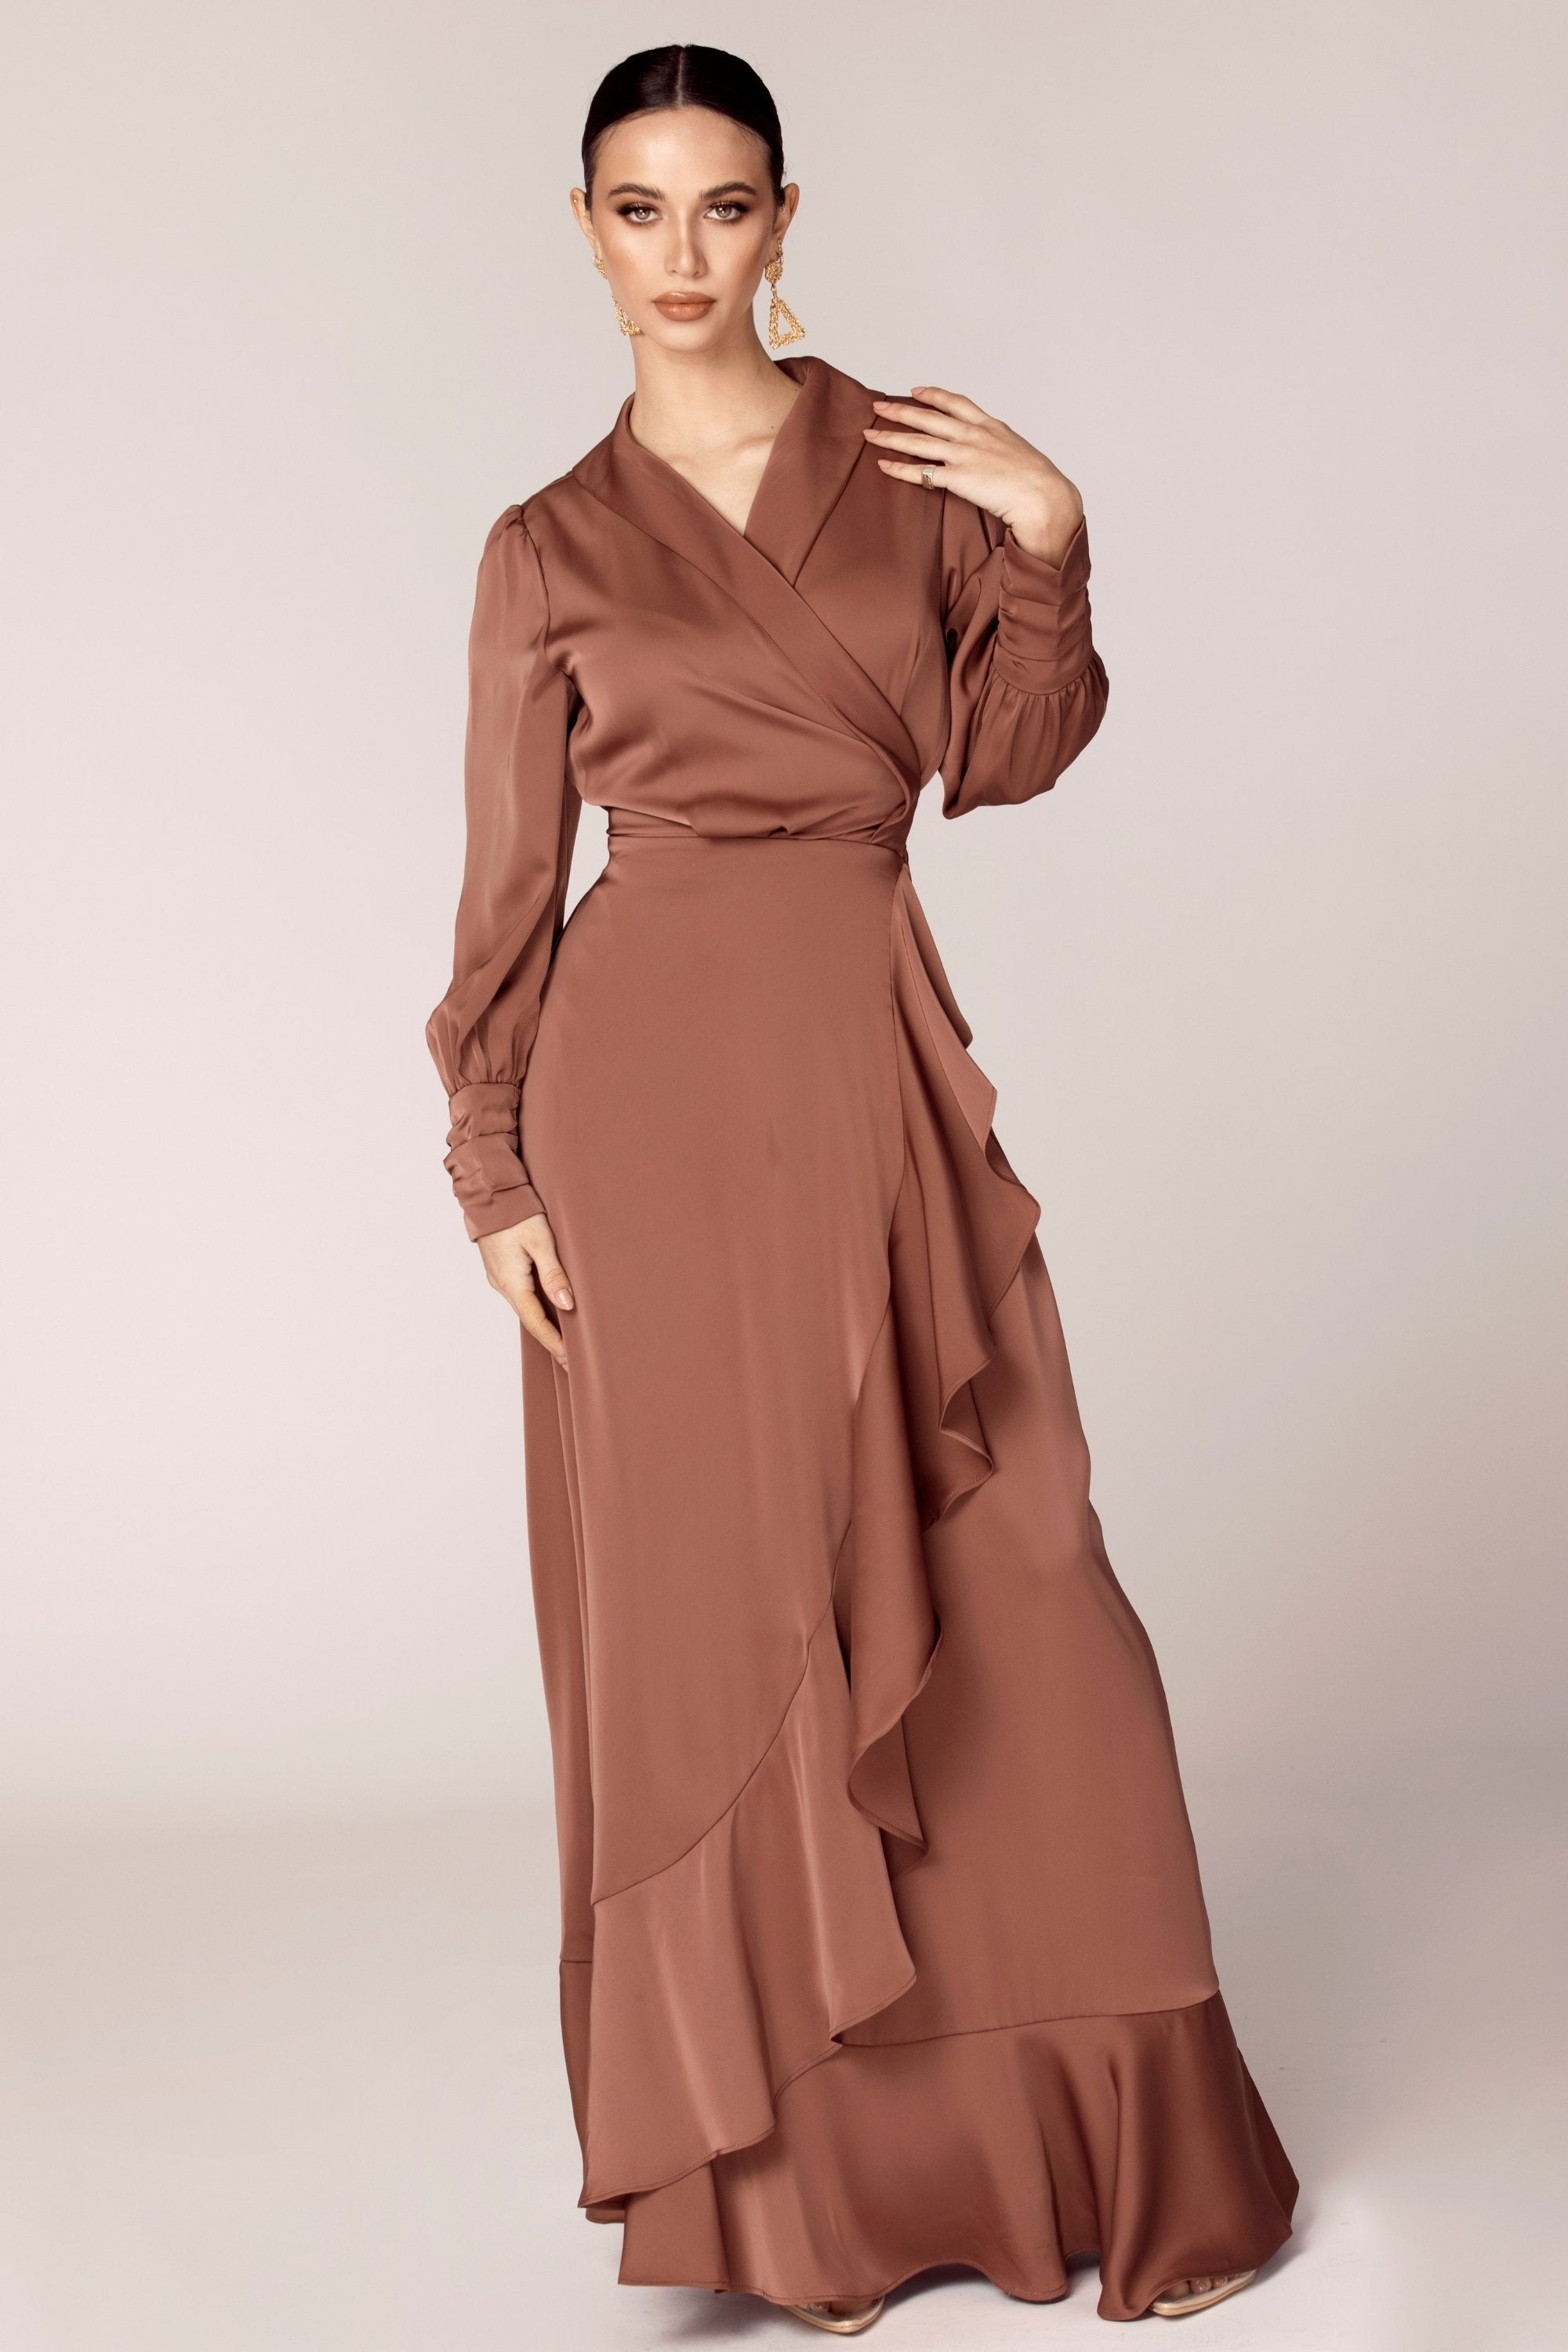 Navy Floral Kiyona Long Formal Plus Size Velvet Wrap Dress for $148.0 – The  Dress Outlet